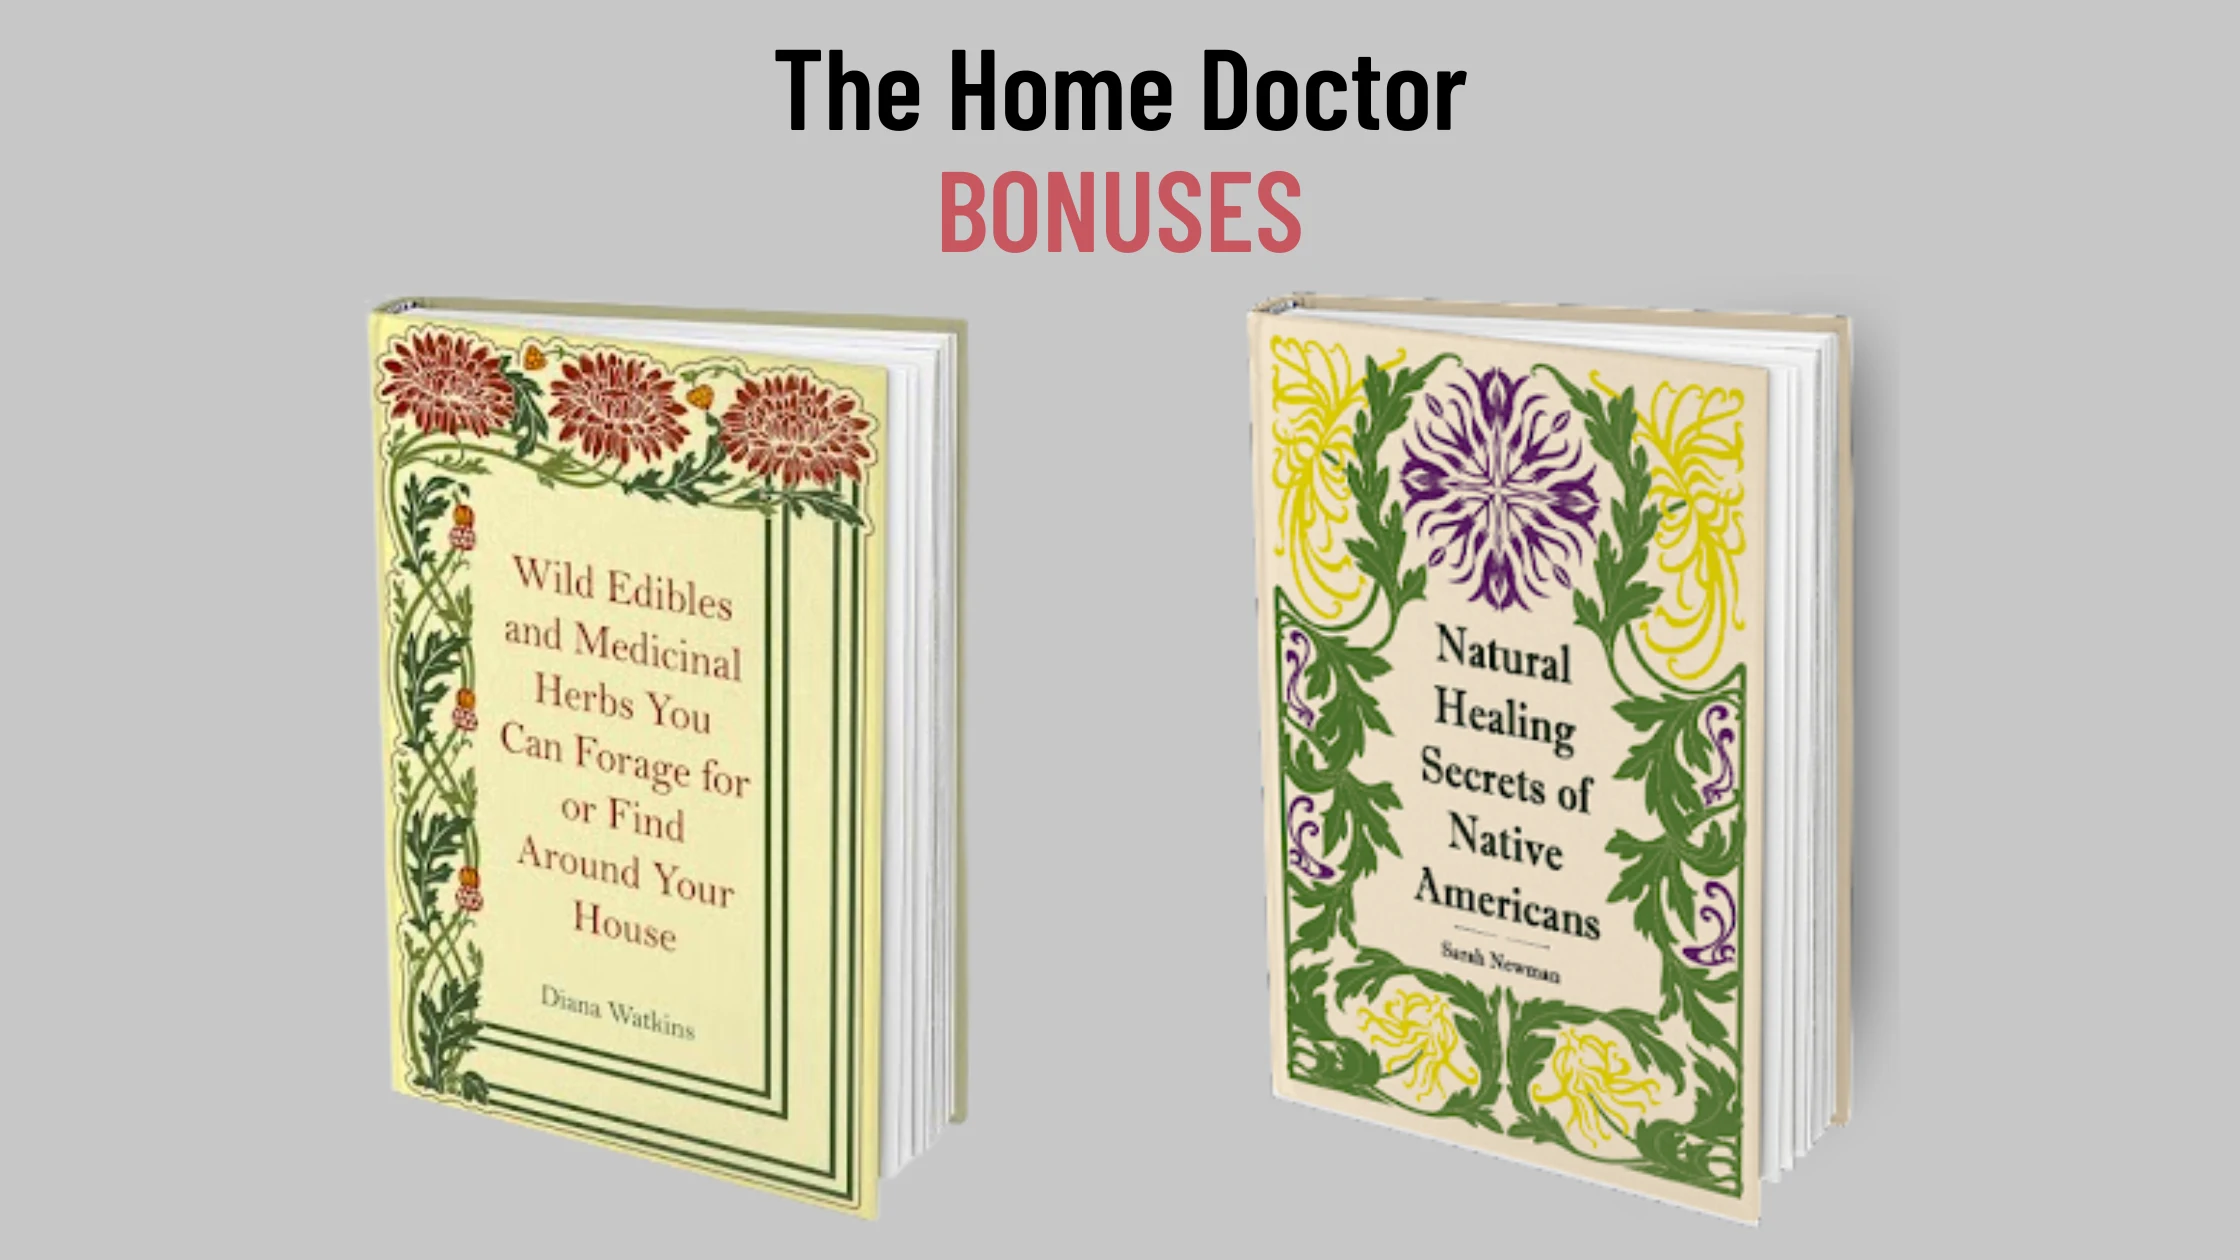 The Home Doctor Bonuses